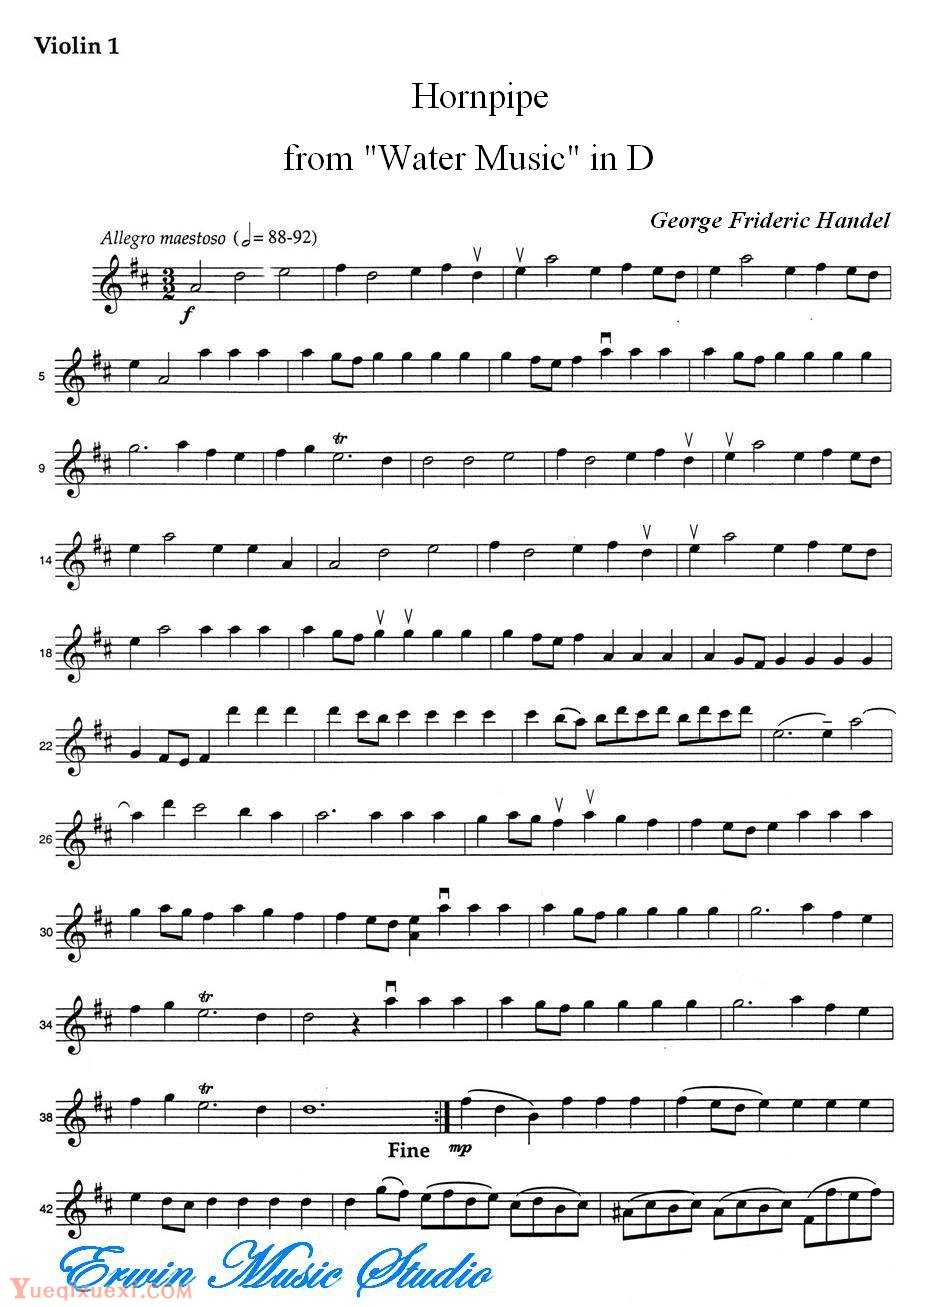 乔治 弗里德里克 亨德尔-D大调管乐 选自水上音乐弦乐三重奏Violin  George Frideric Handel,  Hornpipe  from Water Music in D